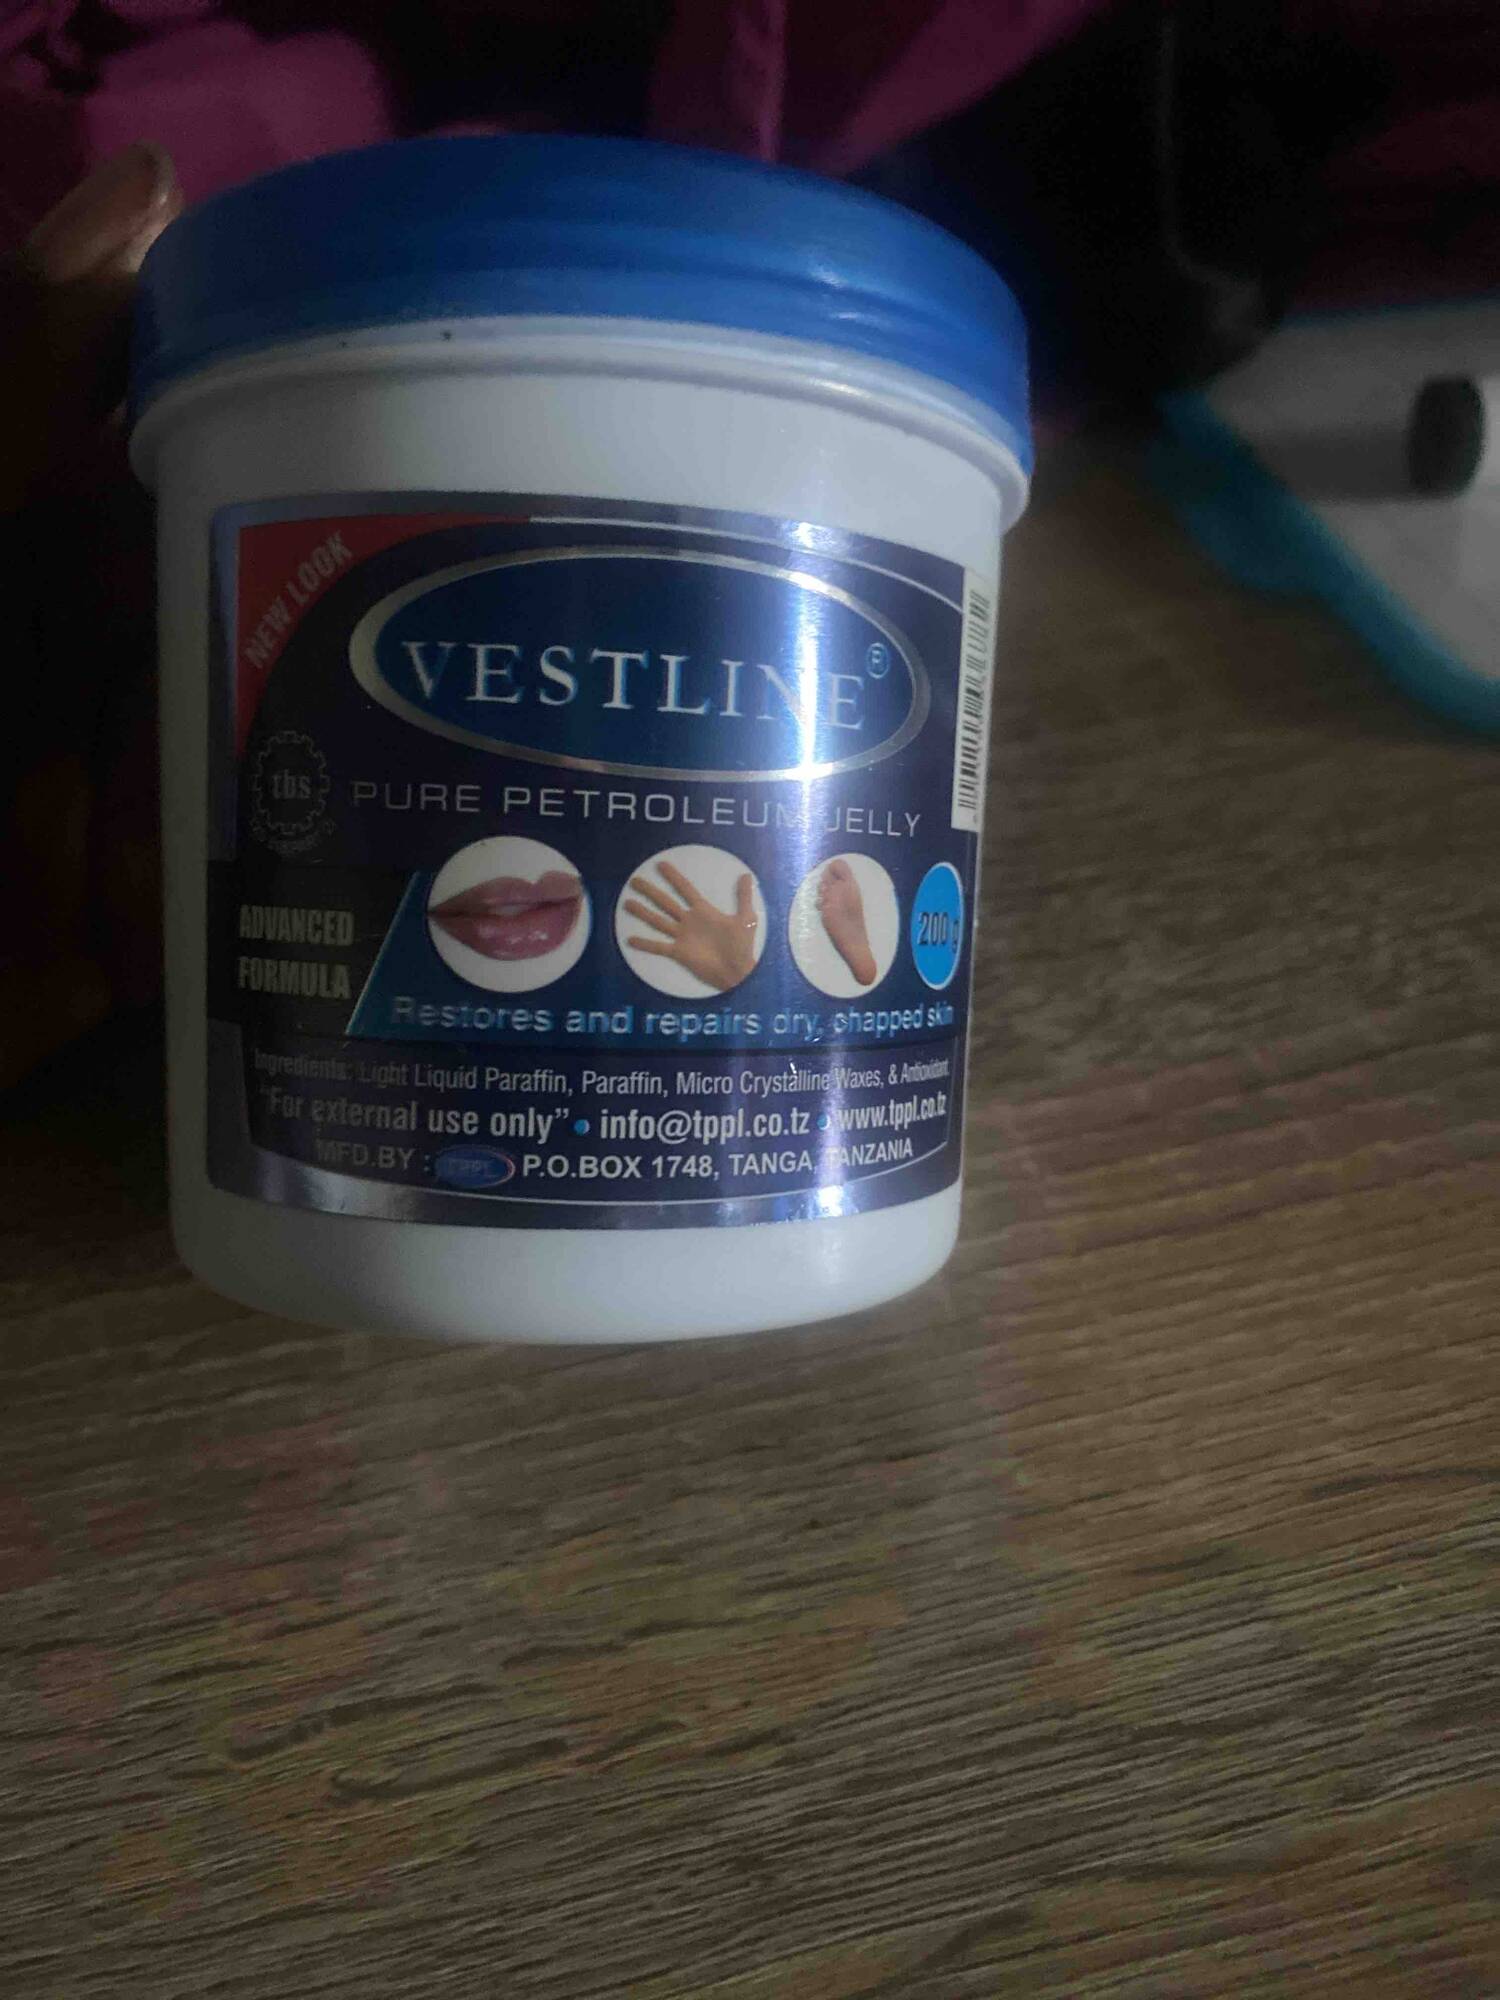 VESTLINE - Pure petroleum jelly